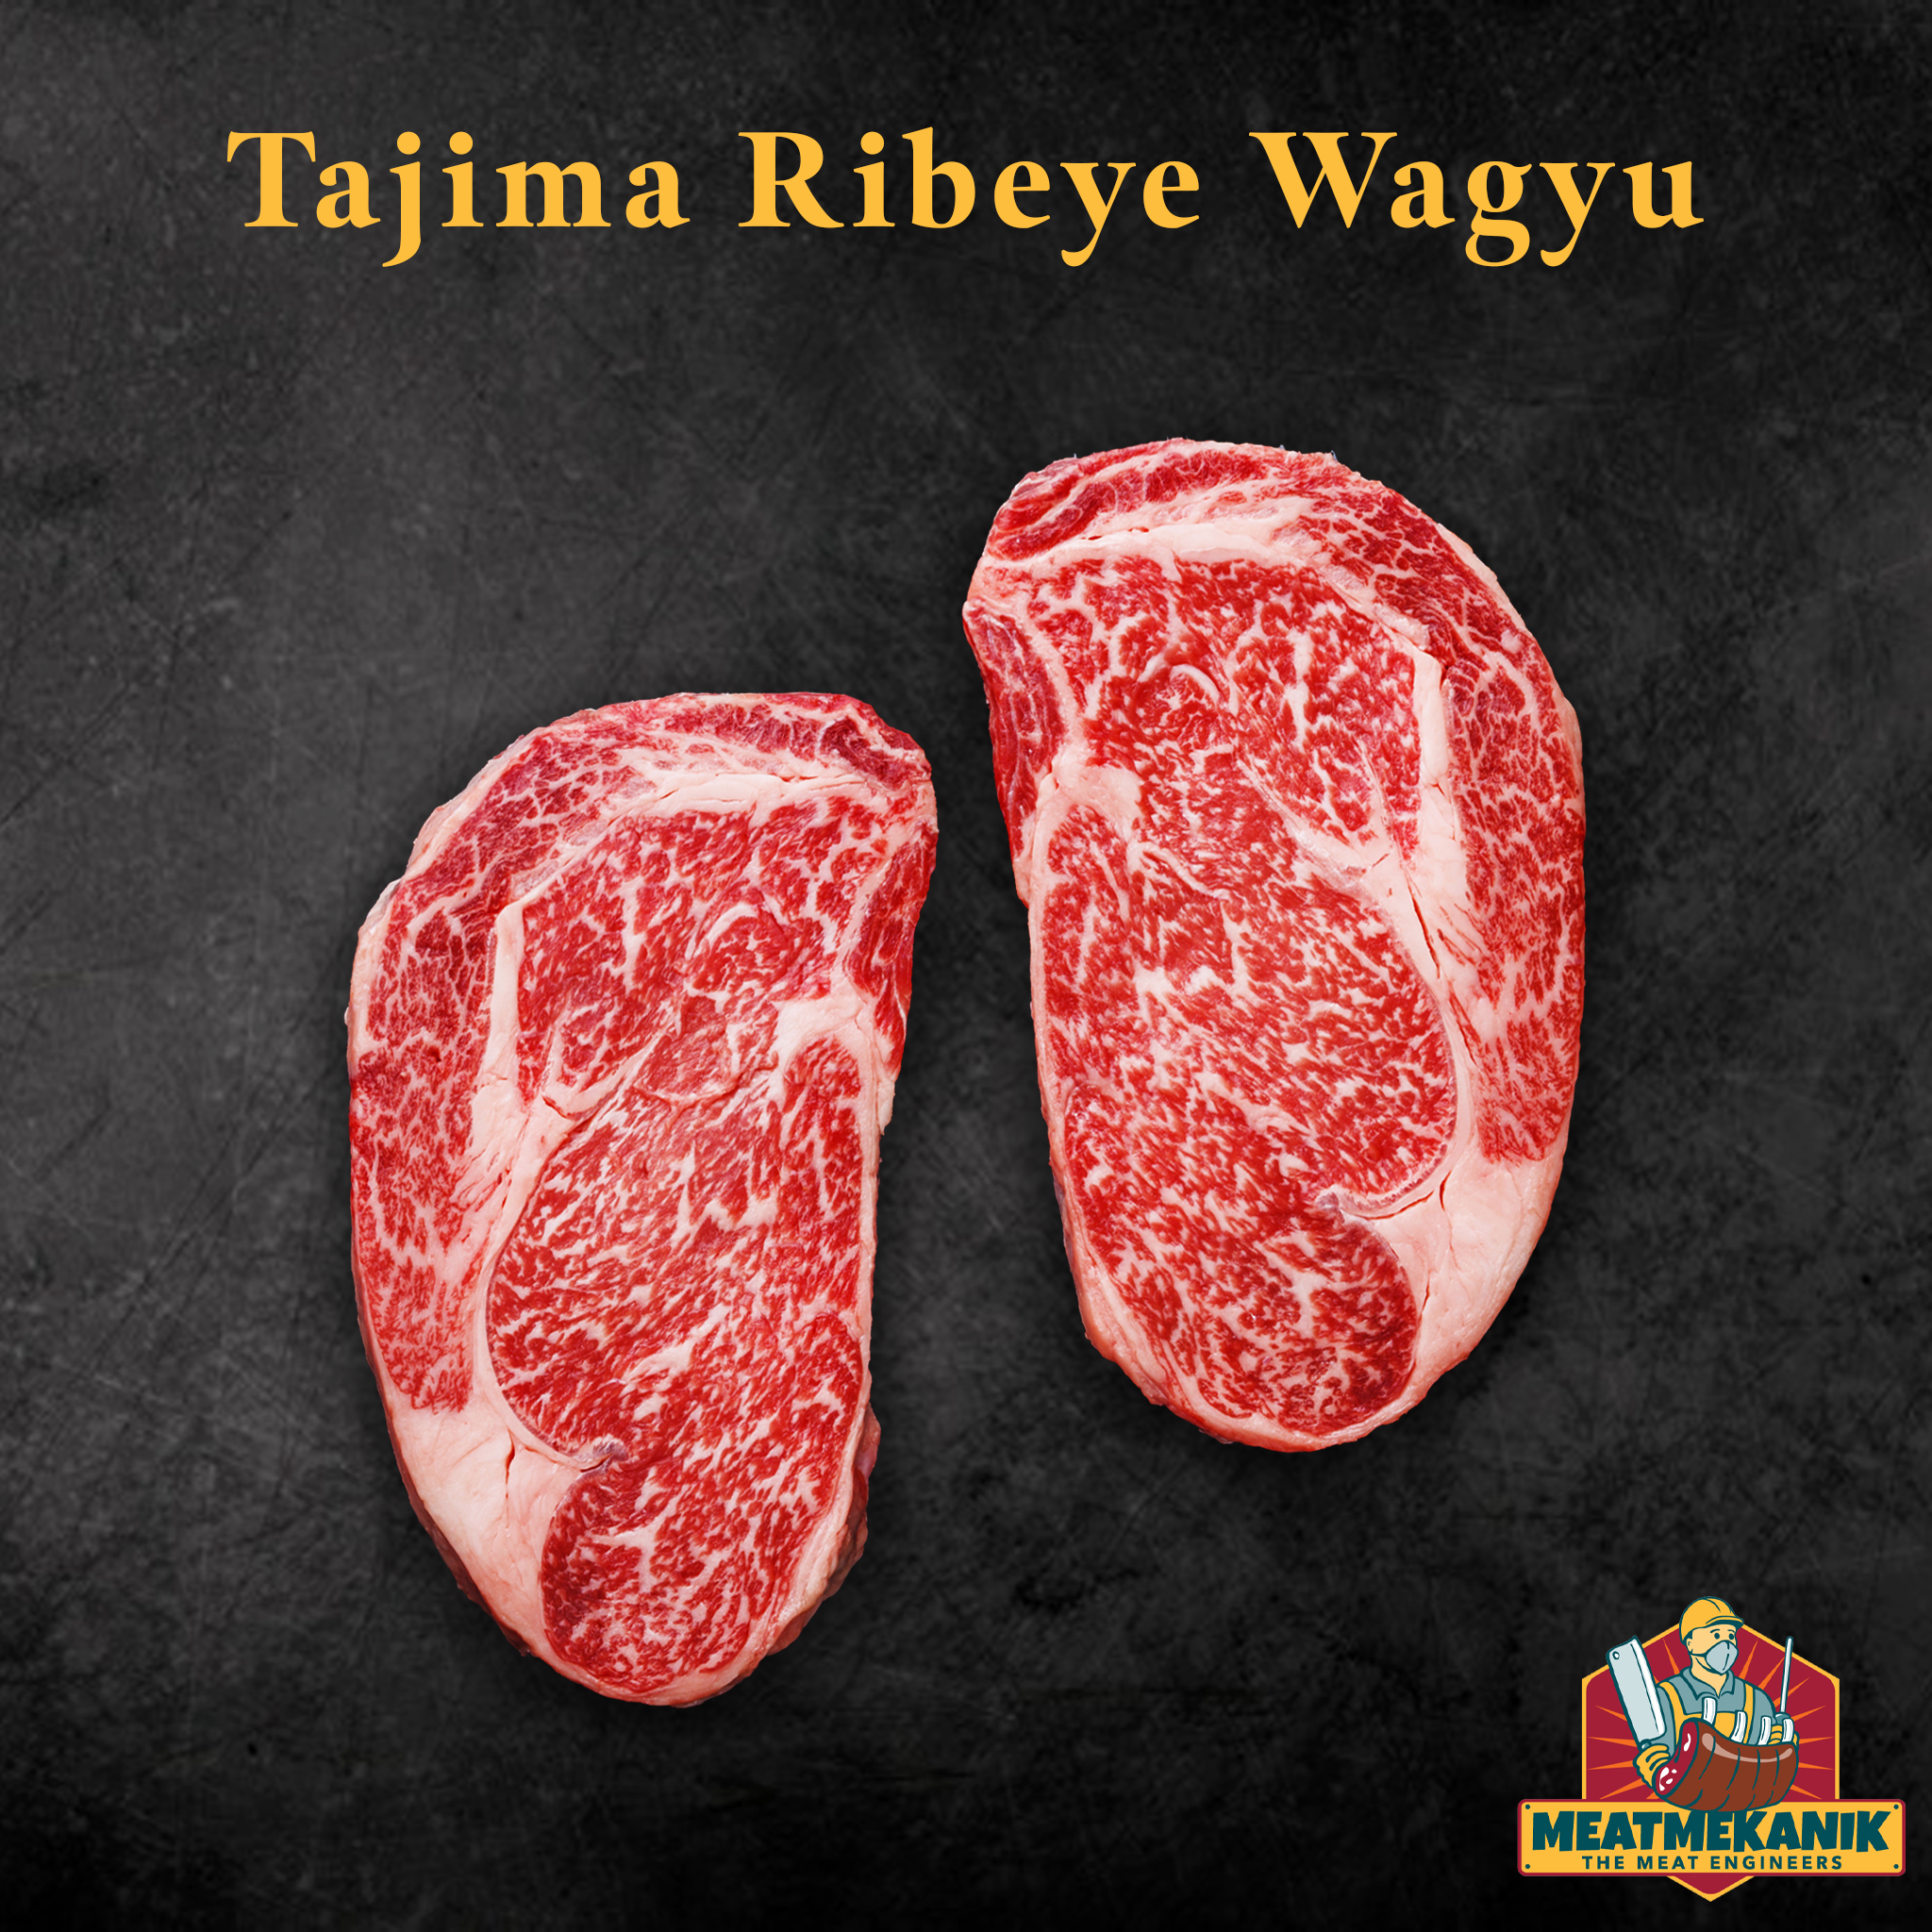 Tajima Wagyu Ribeye 6/7 - Meat Mekanik